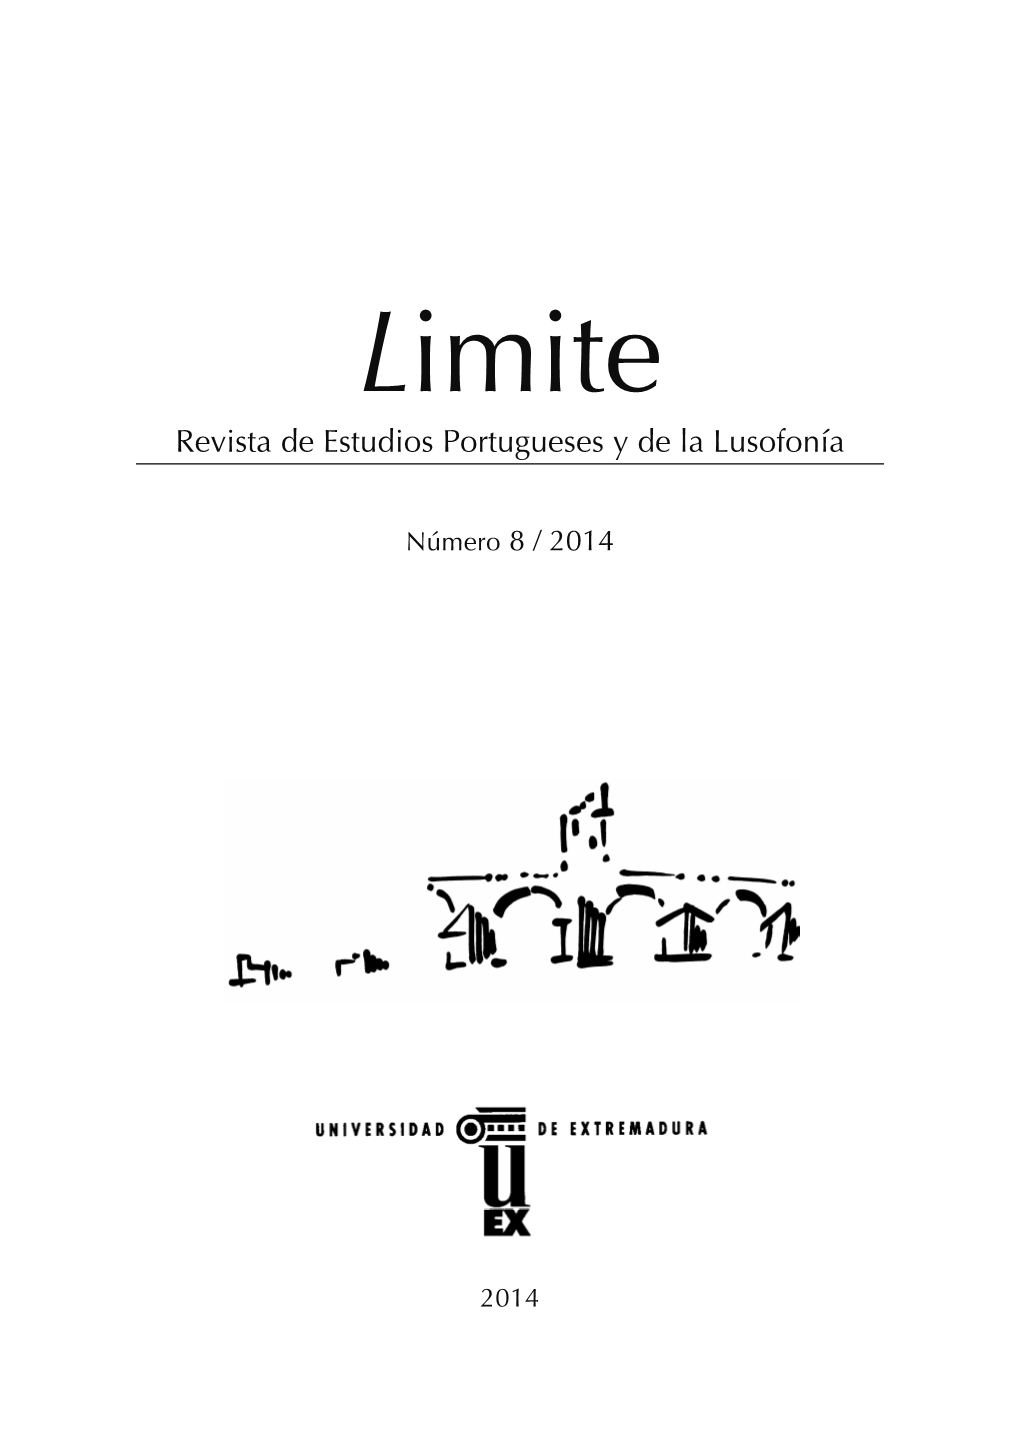 LIMITE DEFINITIVO 2014.Docx 1